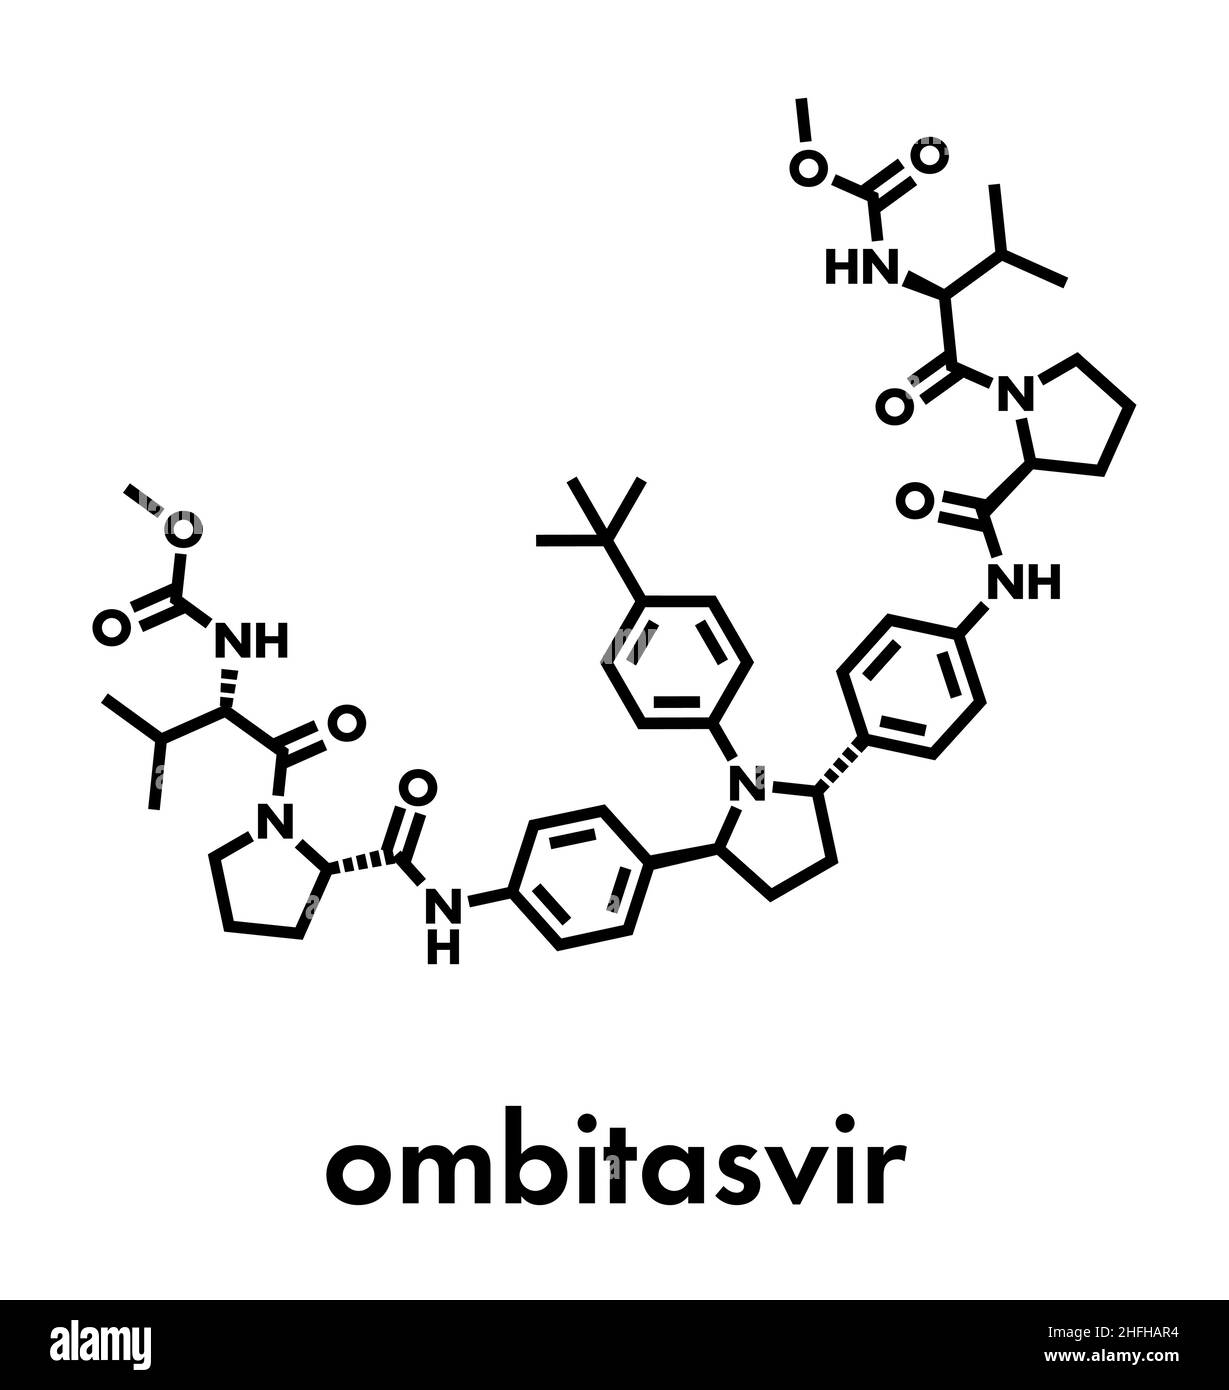 Ombitasvir hepatitis C virus (HCV) drug molecule. Inhibitor of nonstructural protein 5A (NS5A). Skeletal formula. Stock Vector